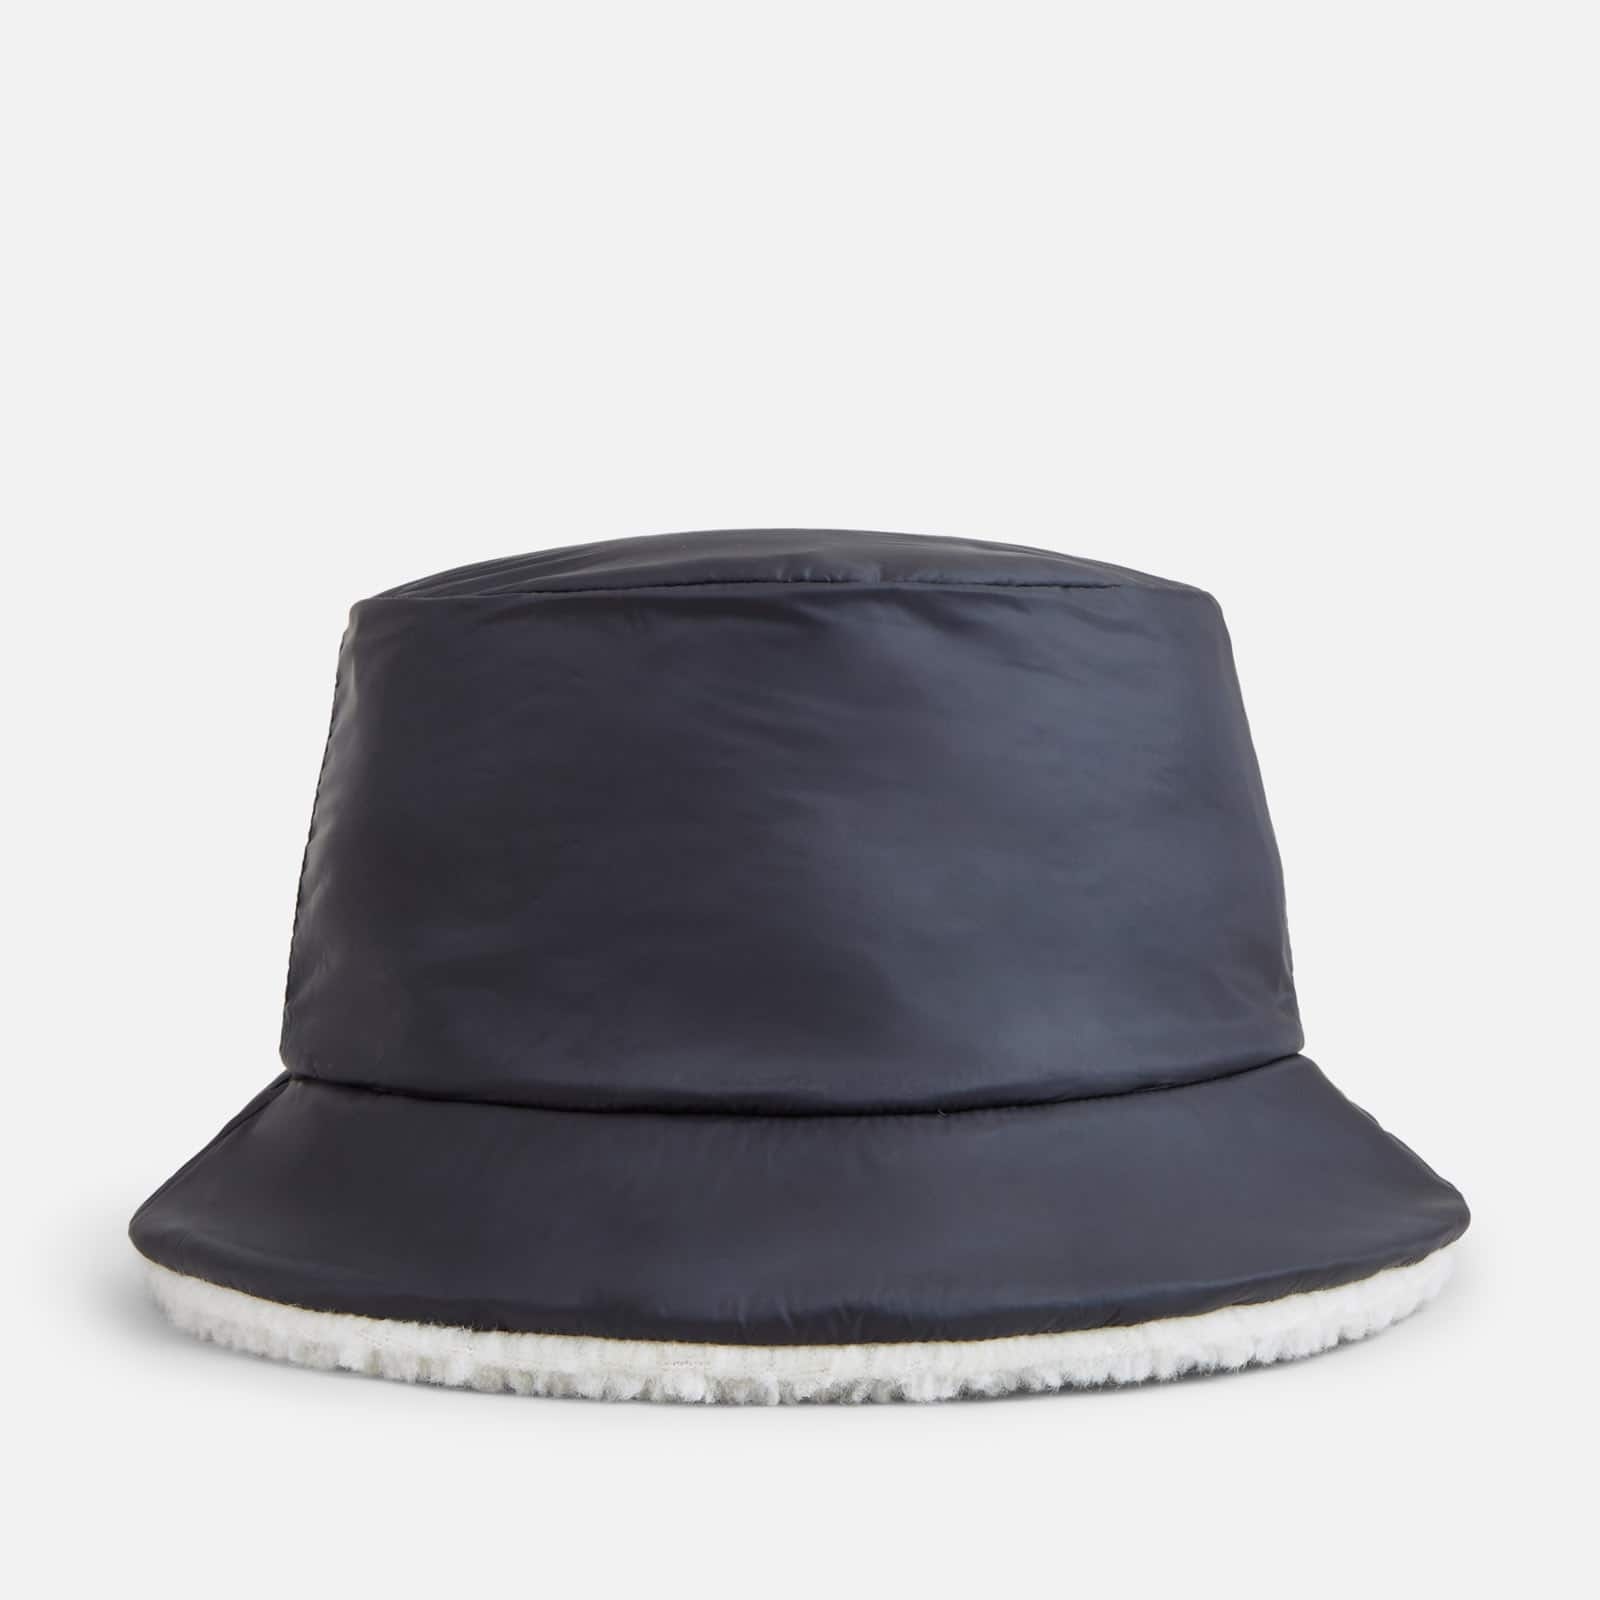 Reversible Hat Black White - 1